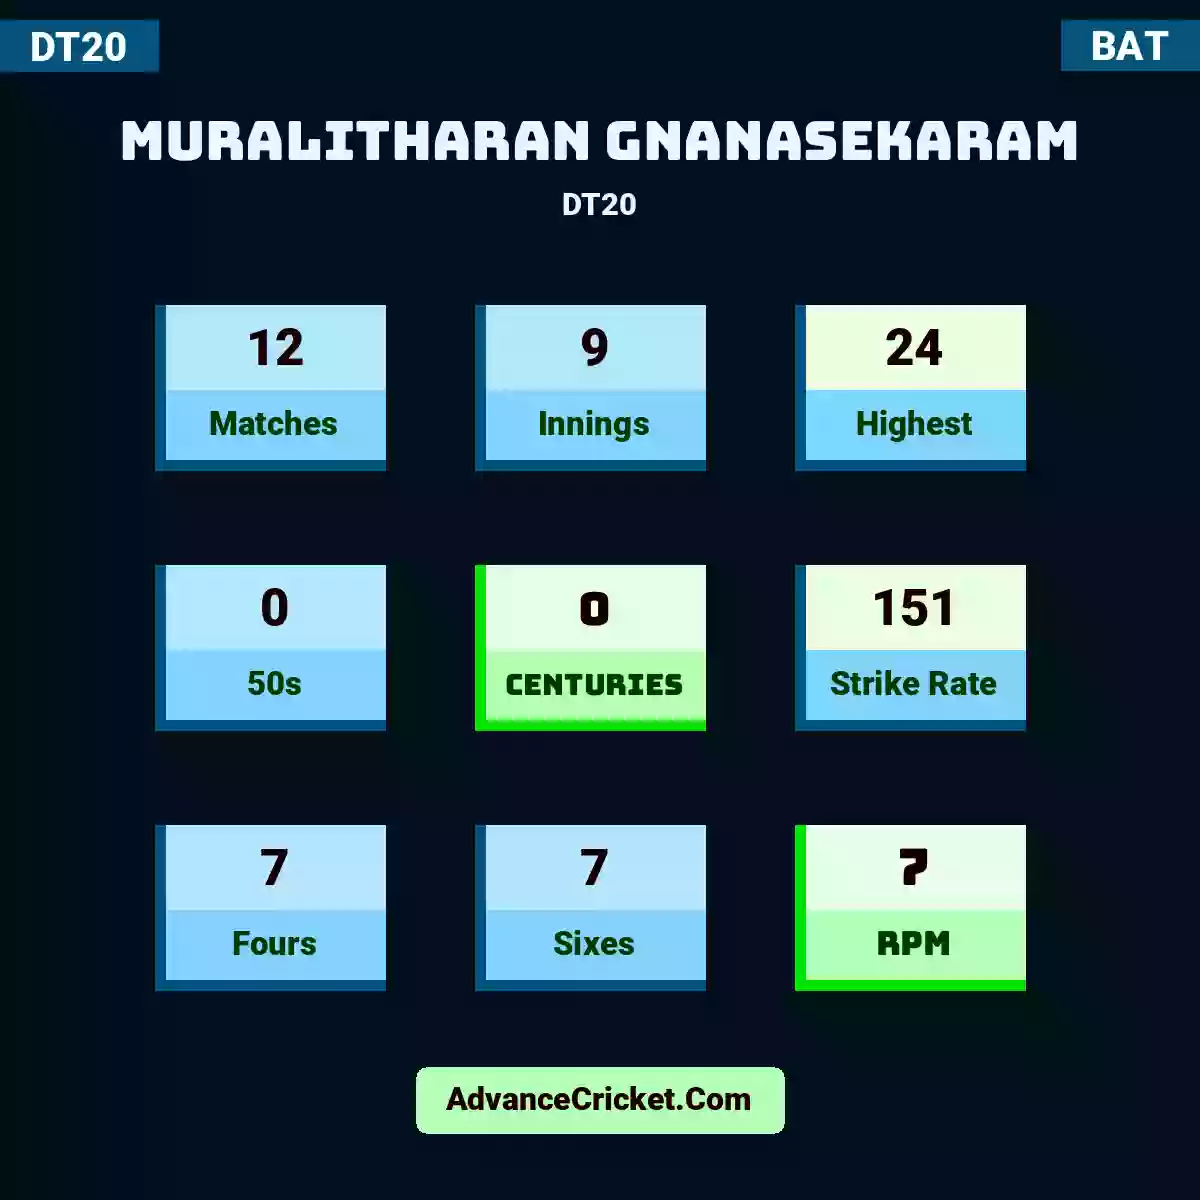 Muralitharan Gnanasekaram DT20 , Muralitharan Gnanasekaram played 12 matches, scored 24 runs as highest, 0 half-centuries, and 0 centuries, with a strike rate of 151. M.Gnanasekaram hit 7 fours and 7 sixes, with an RPM of 7.